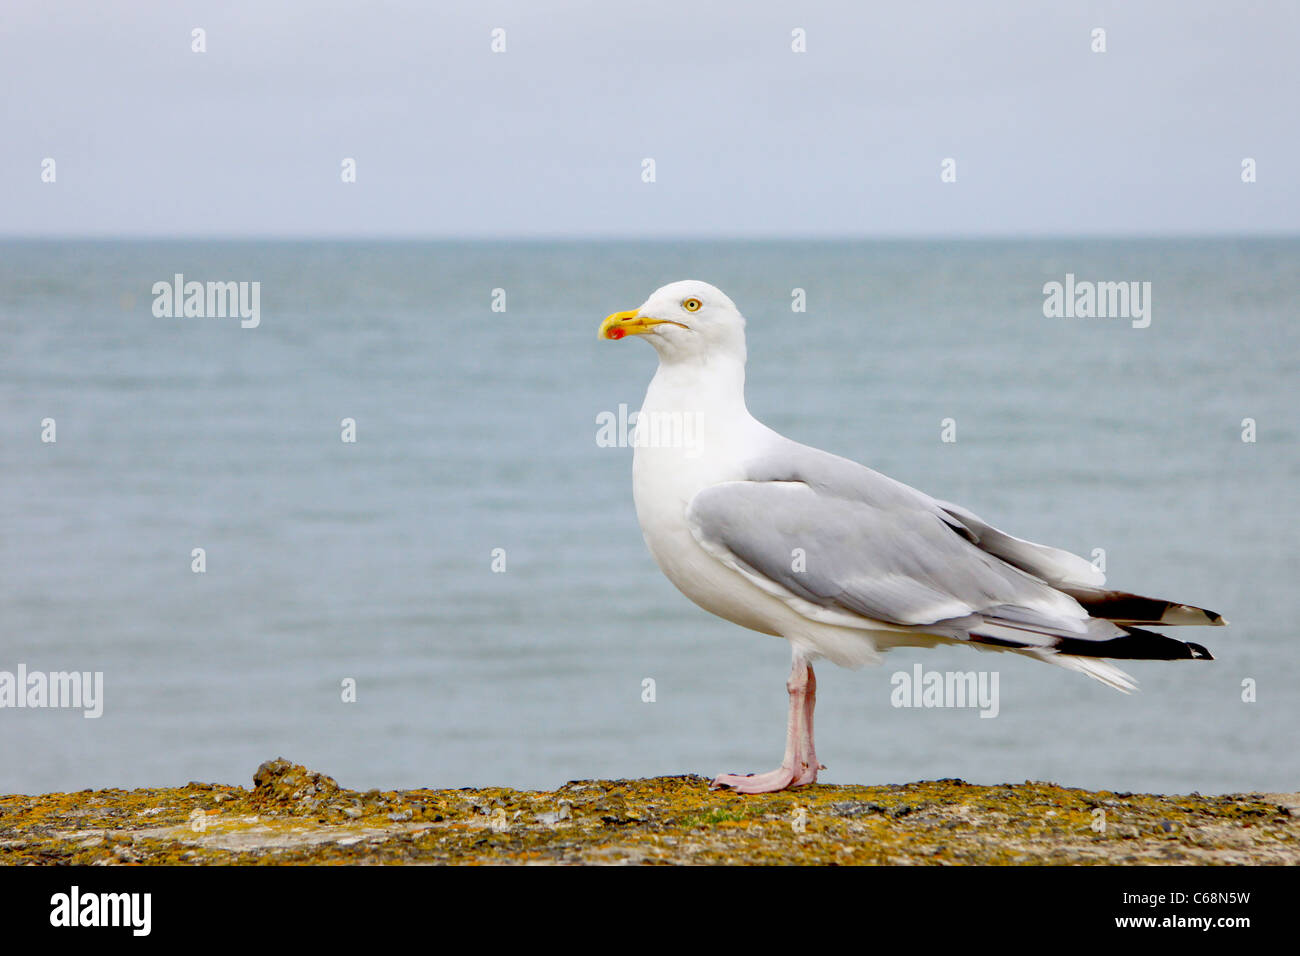 Herring gull standing on rocks Stock Photo